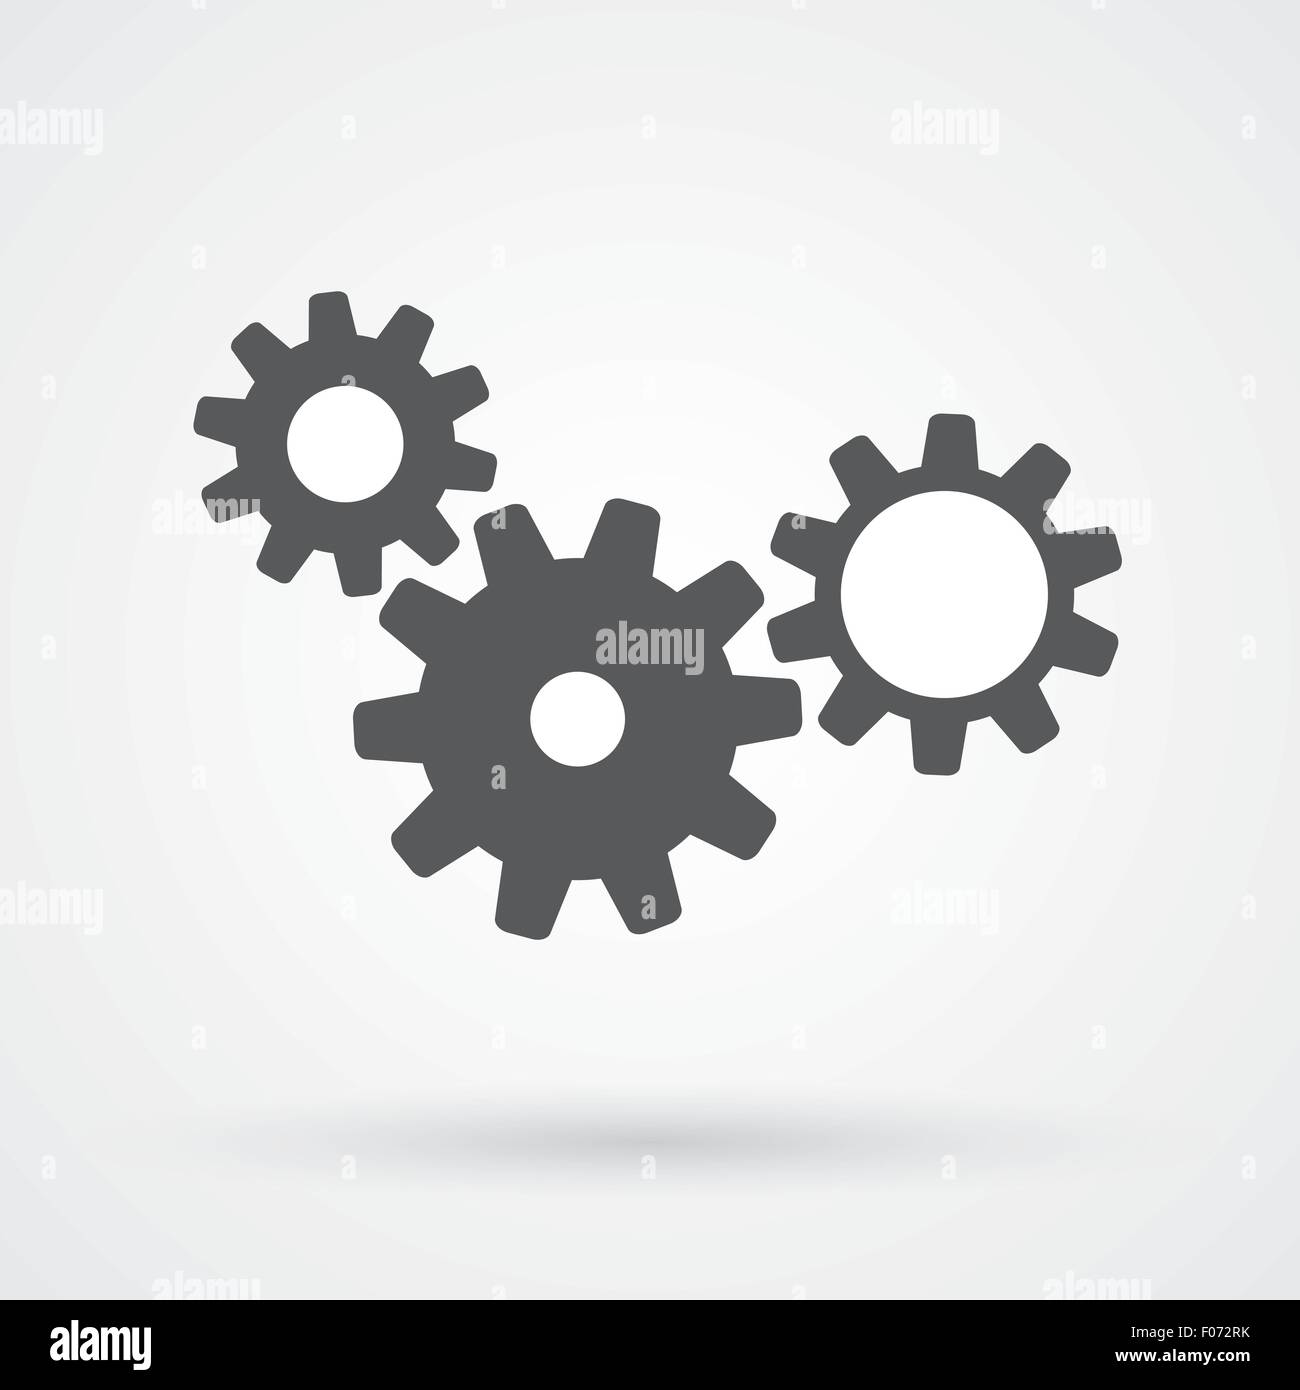 Abstract gear icon design as team work concept vector illustration. Stock Vector